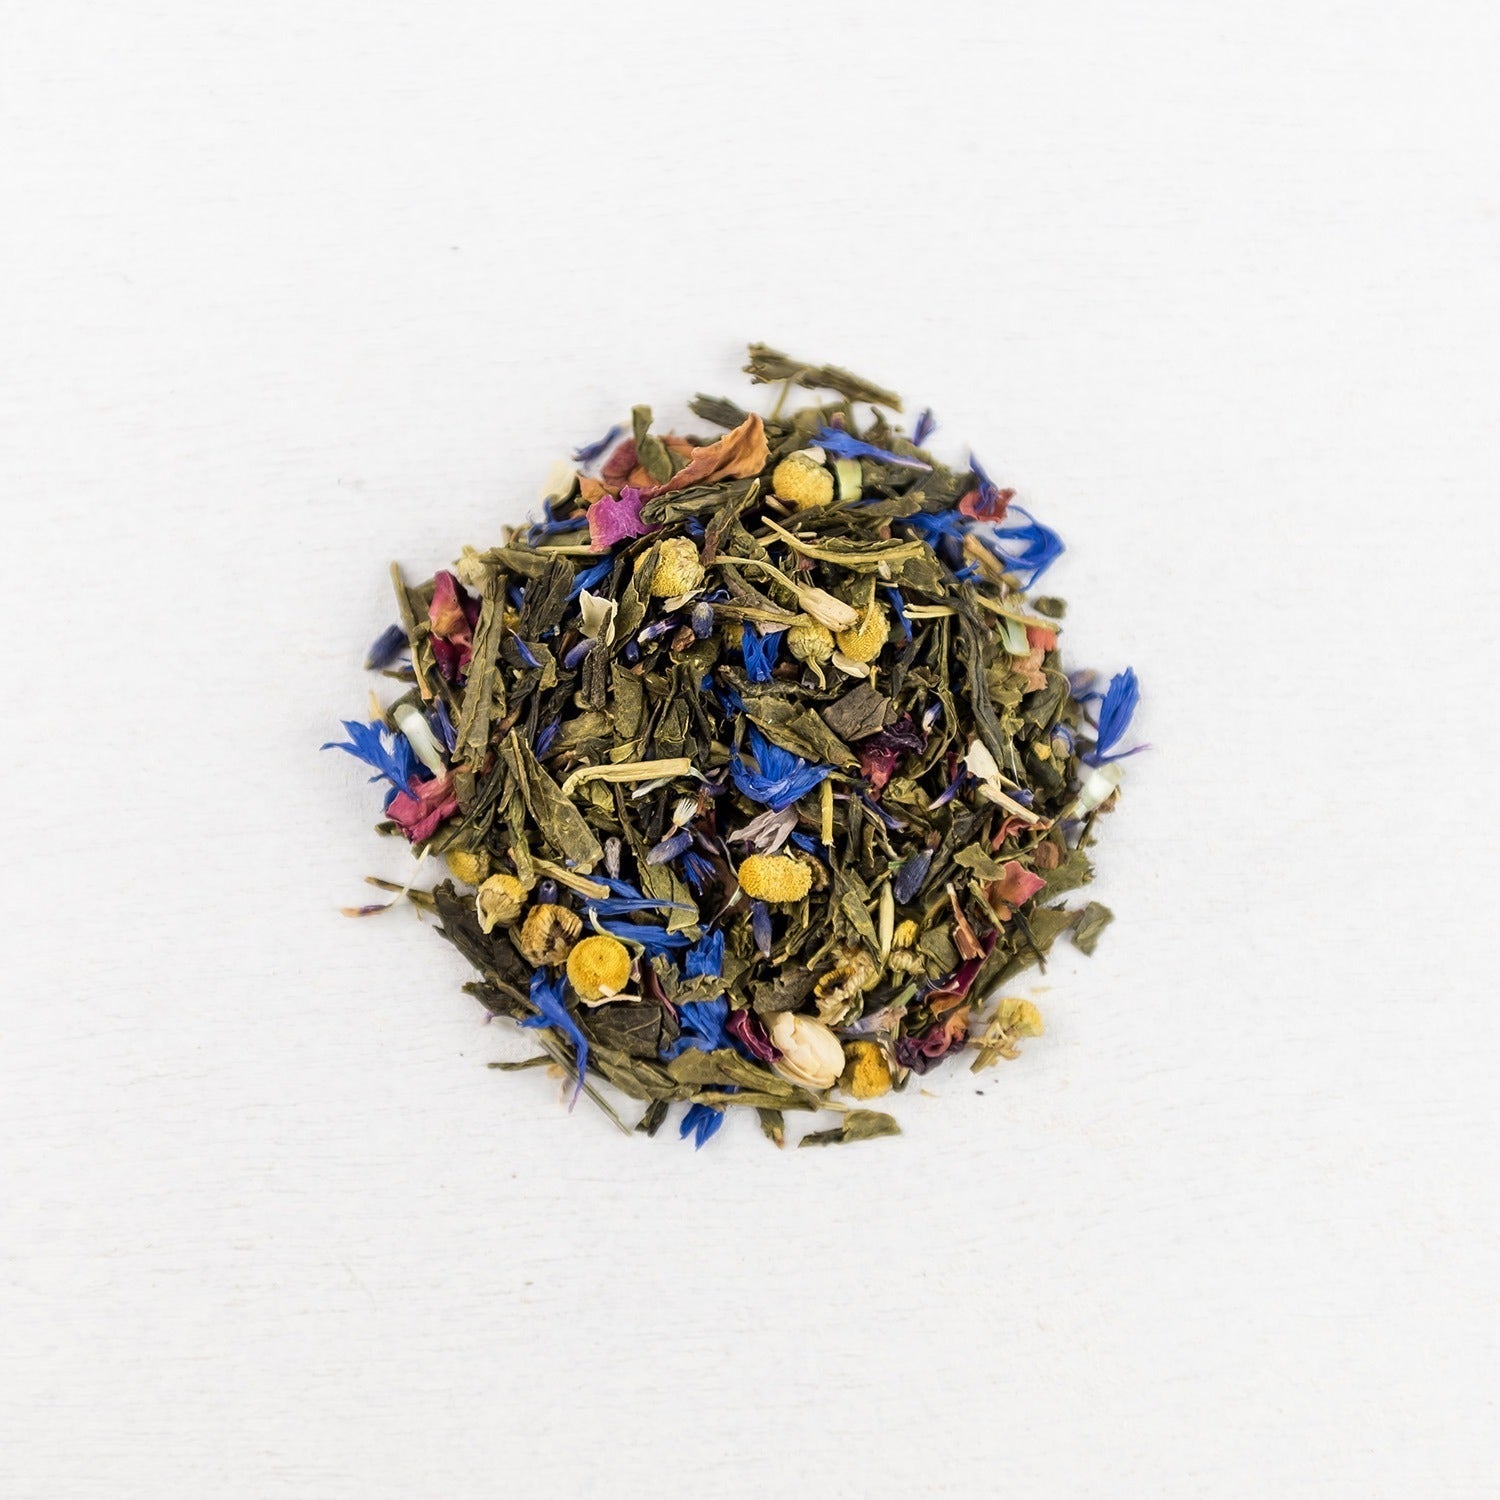 Organics for Lily Test Tube Tea Tea